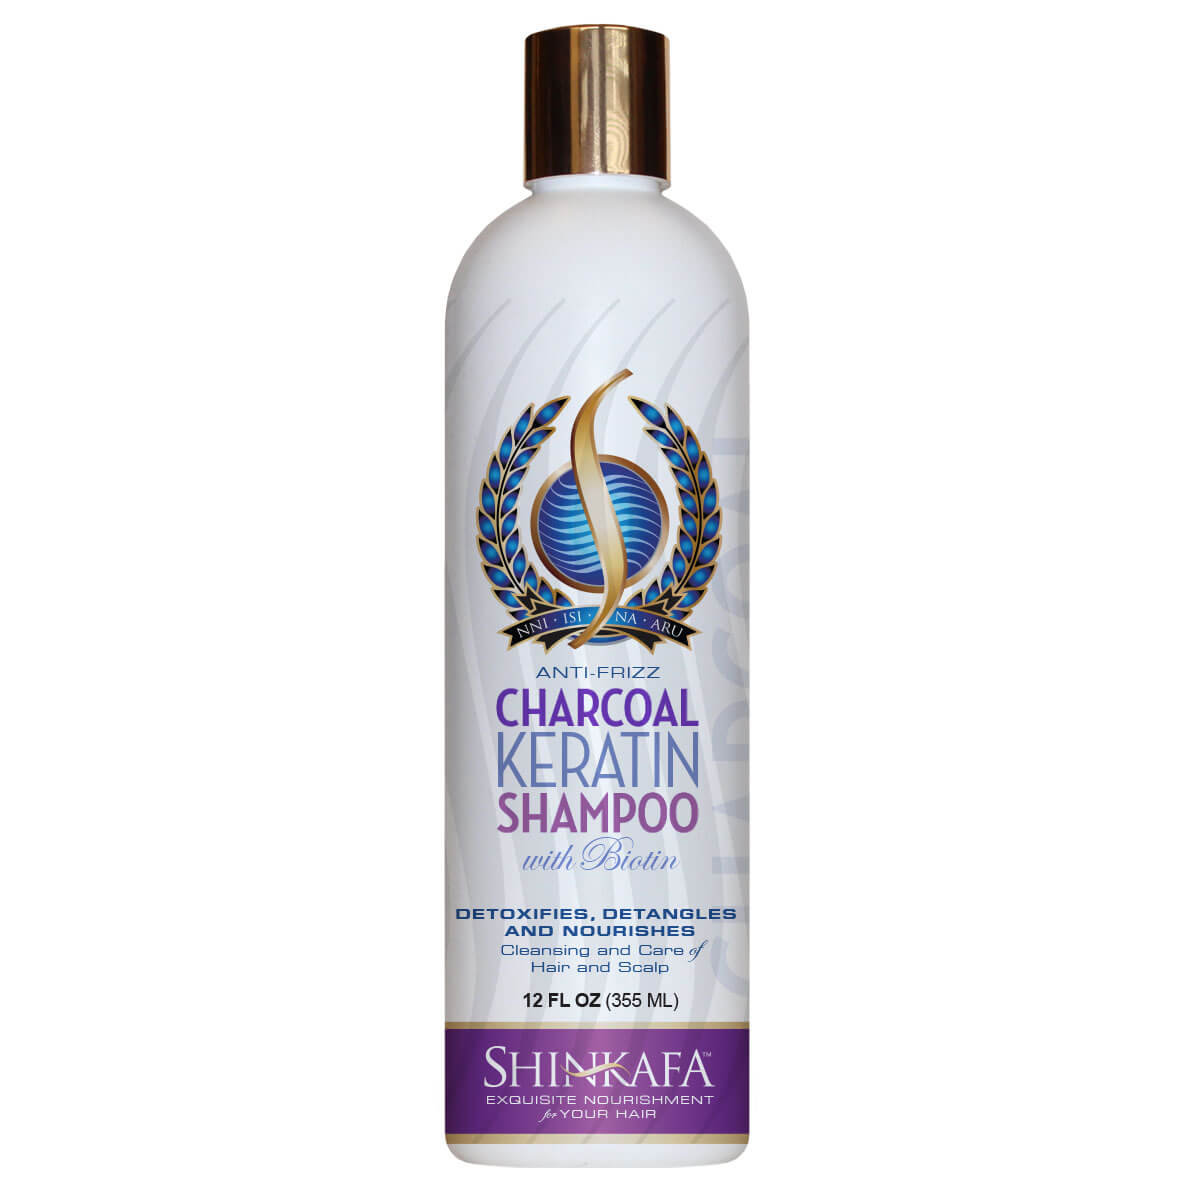 Shinkafa Anti-Frizz Charcoal Keratin Shampoo with Biotin